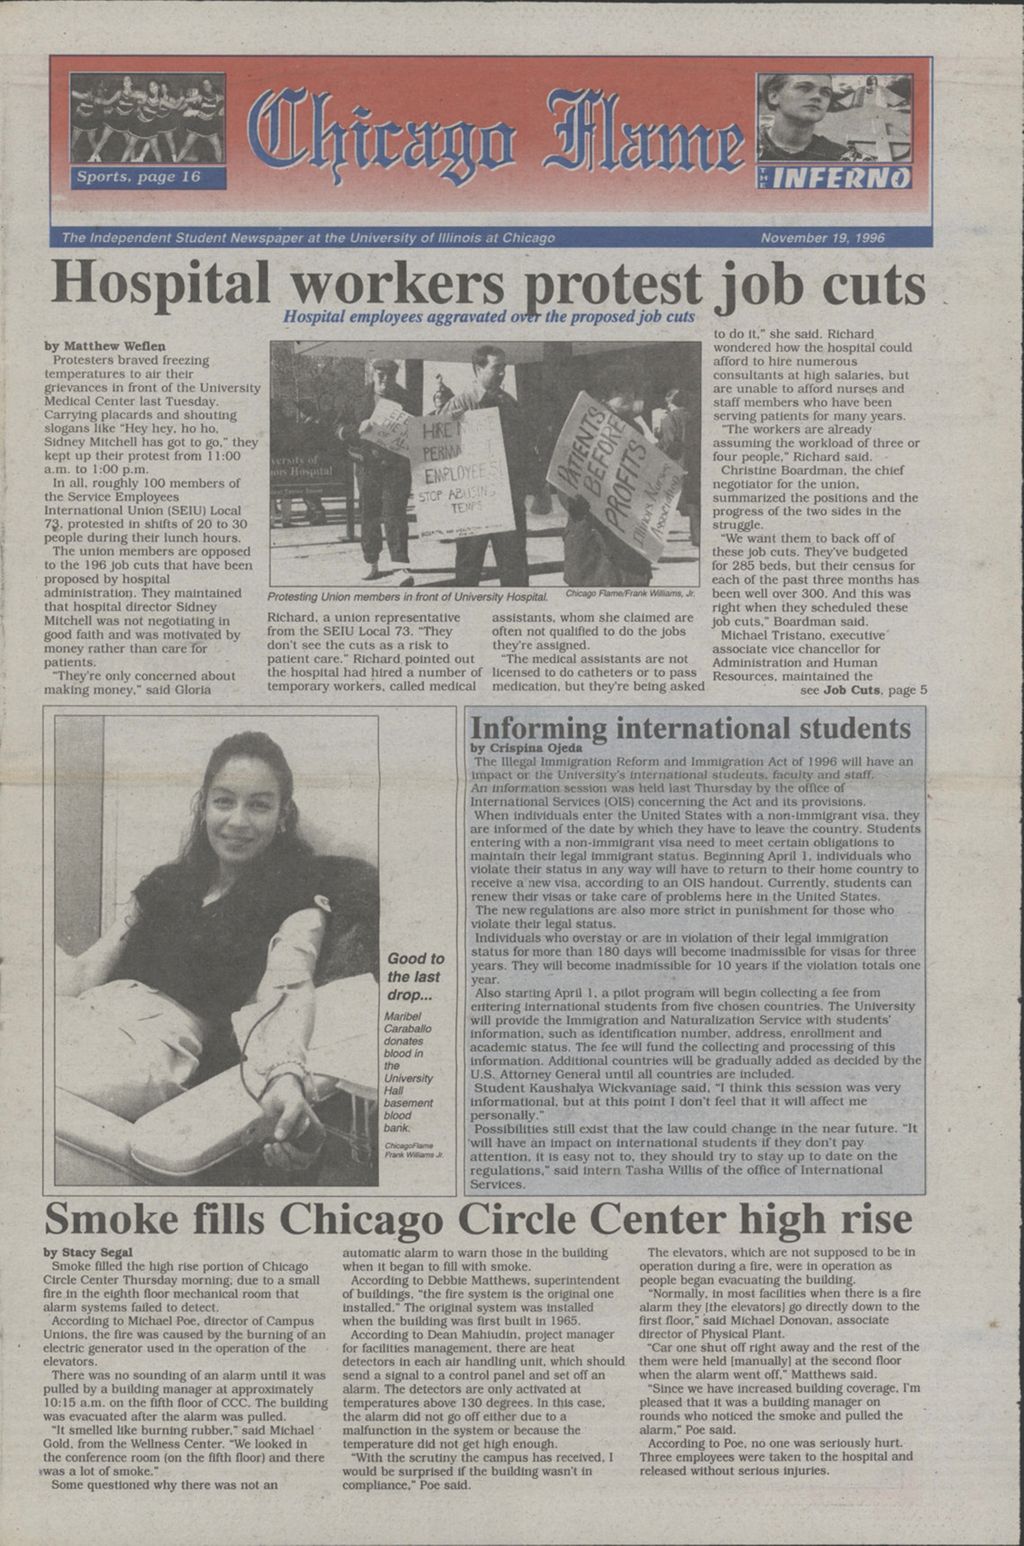 Chicago Flame (November 19, 1996)